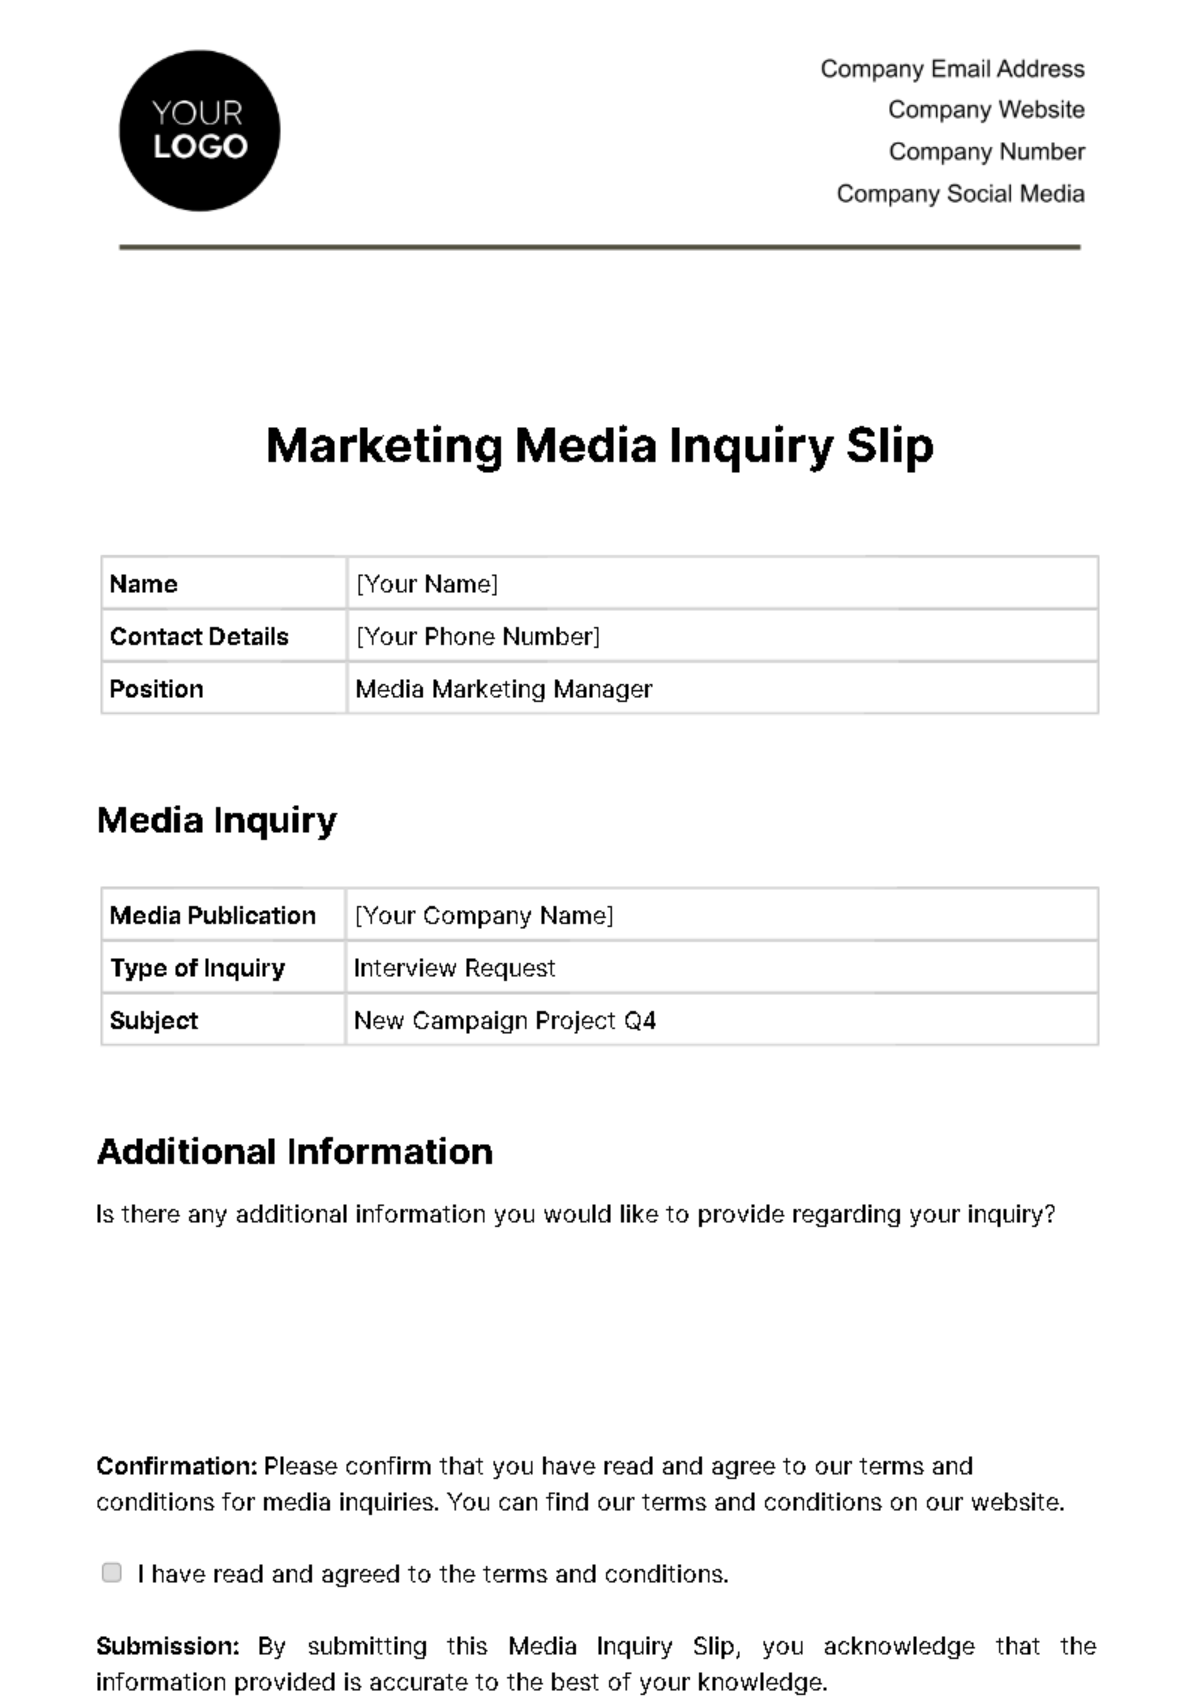 Marketing Media Inquiry Slip Template